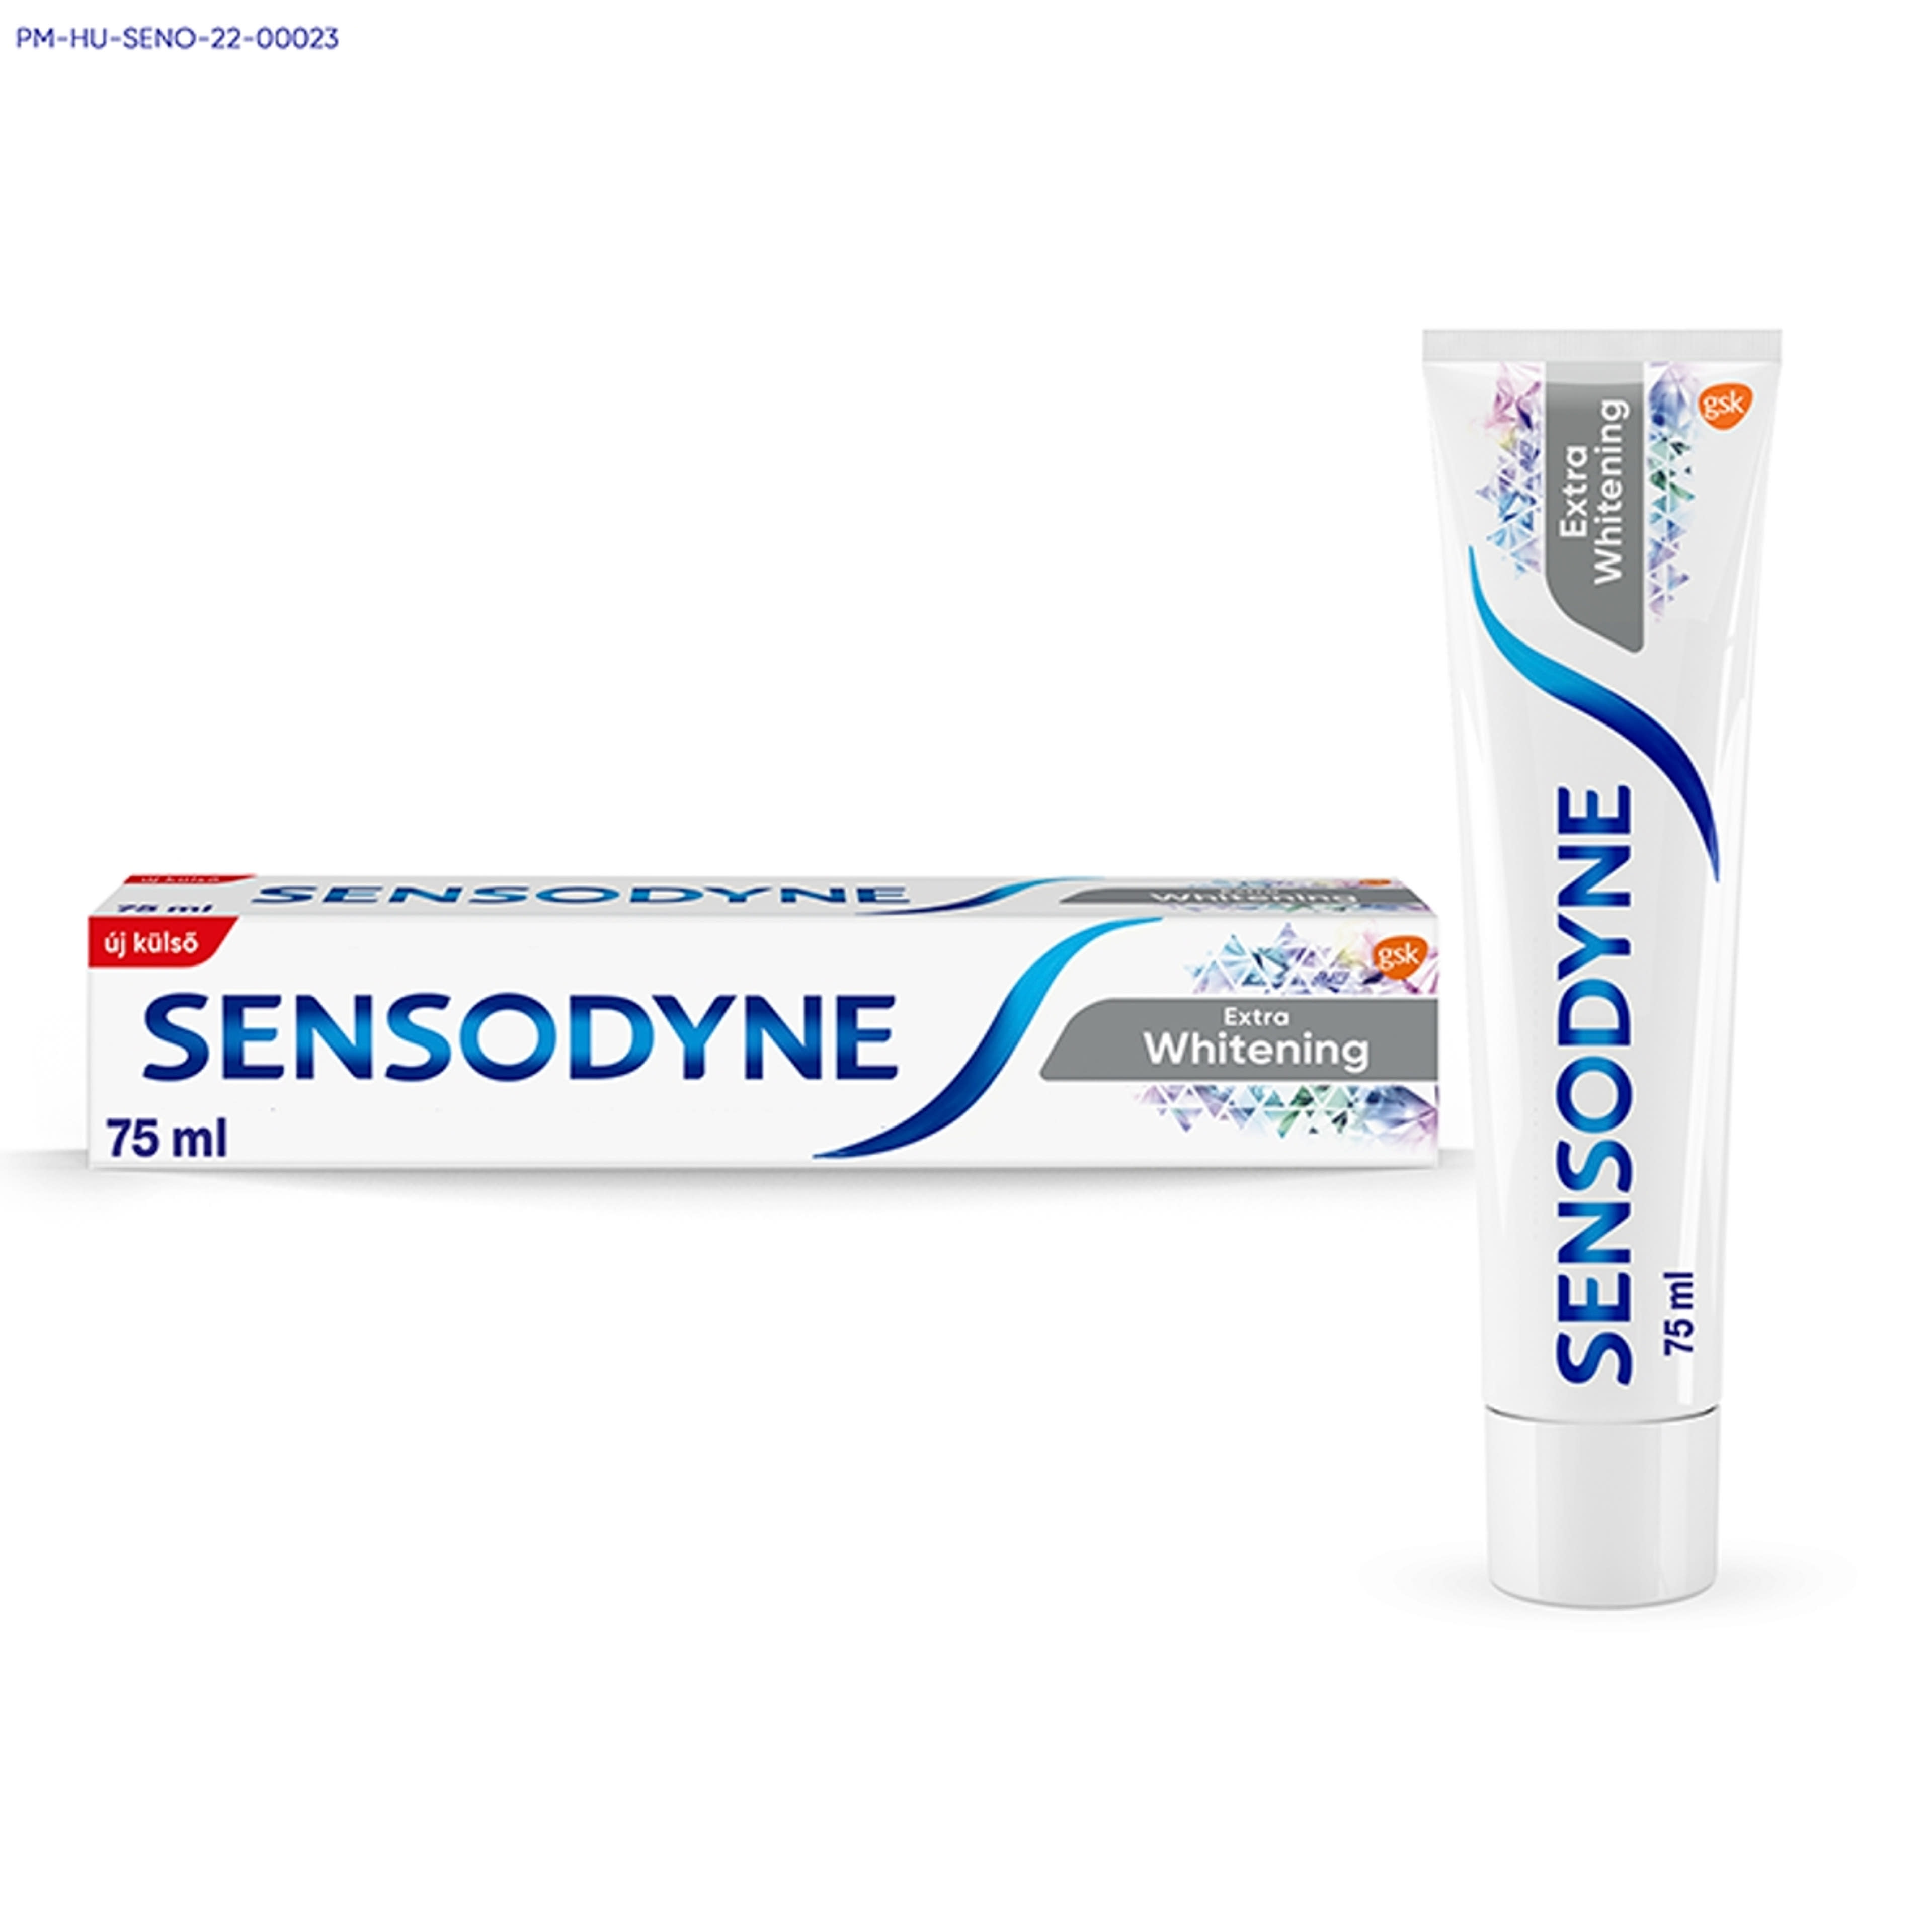 Sensodyne Extra Whitening fogkrém - 75 ml-2